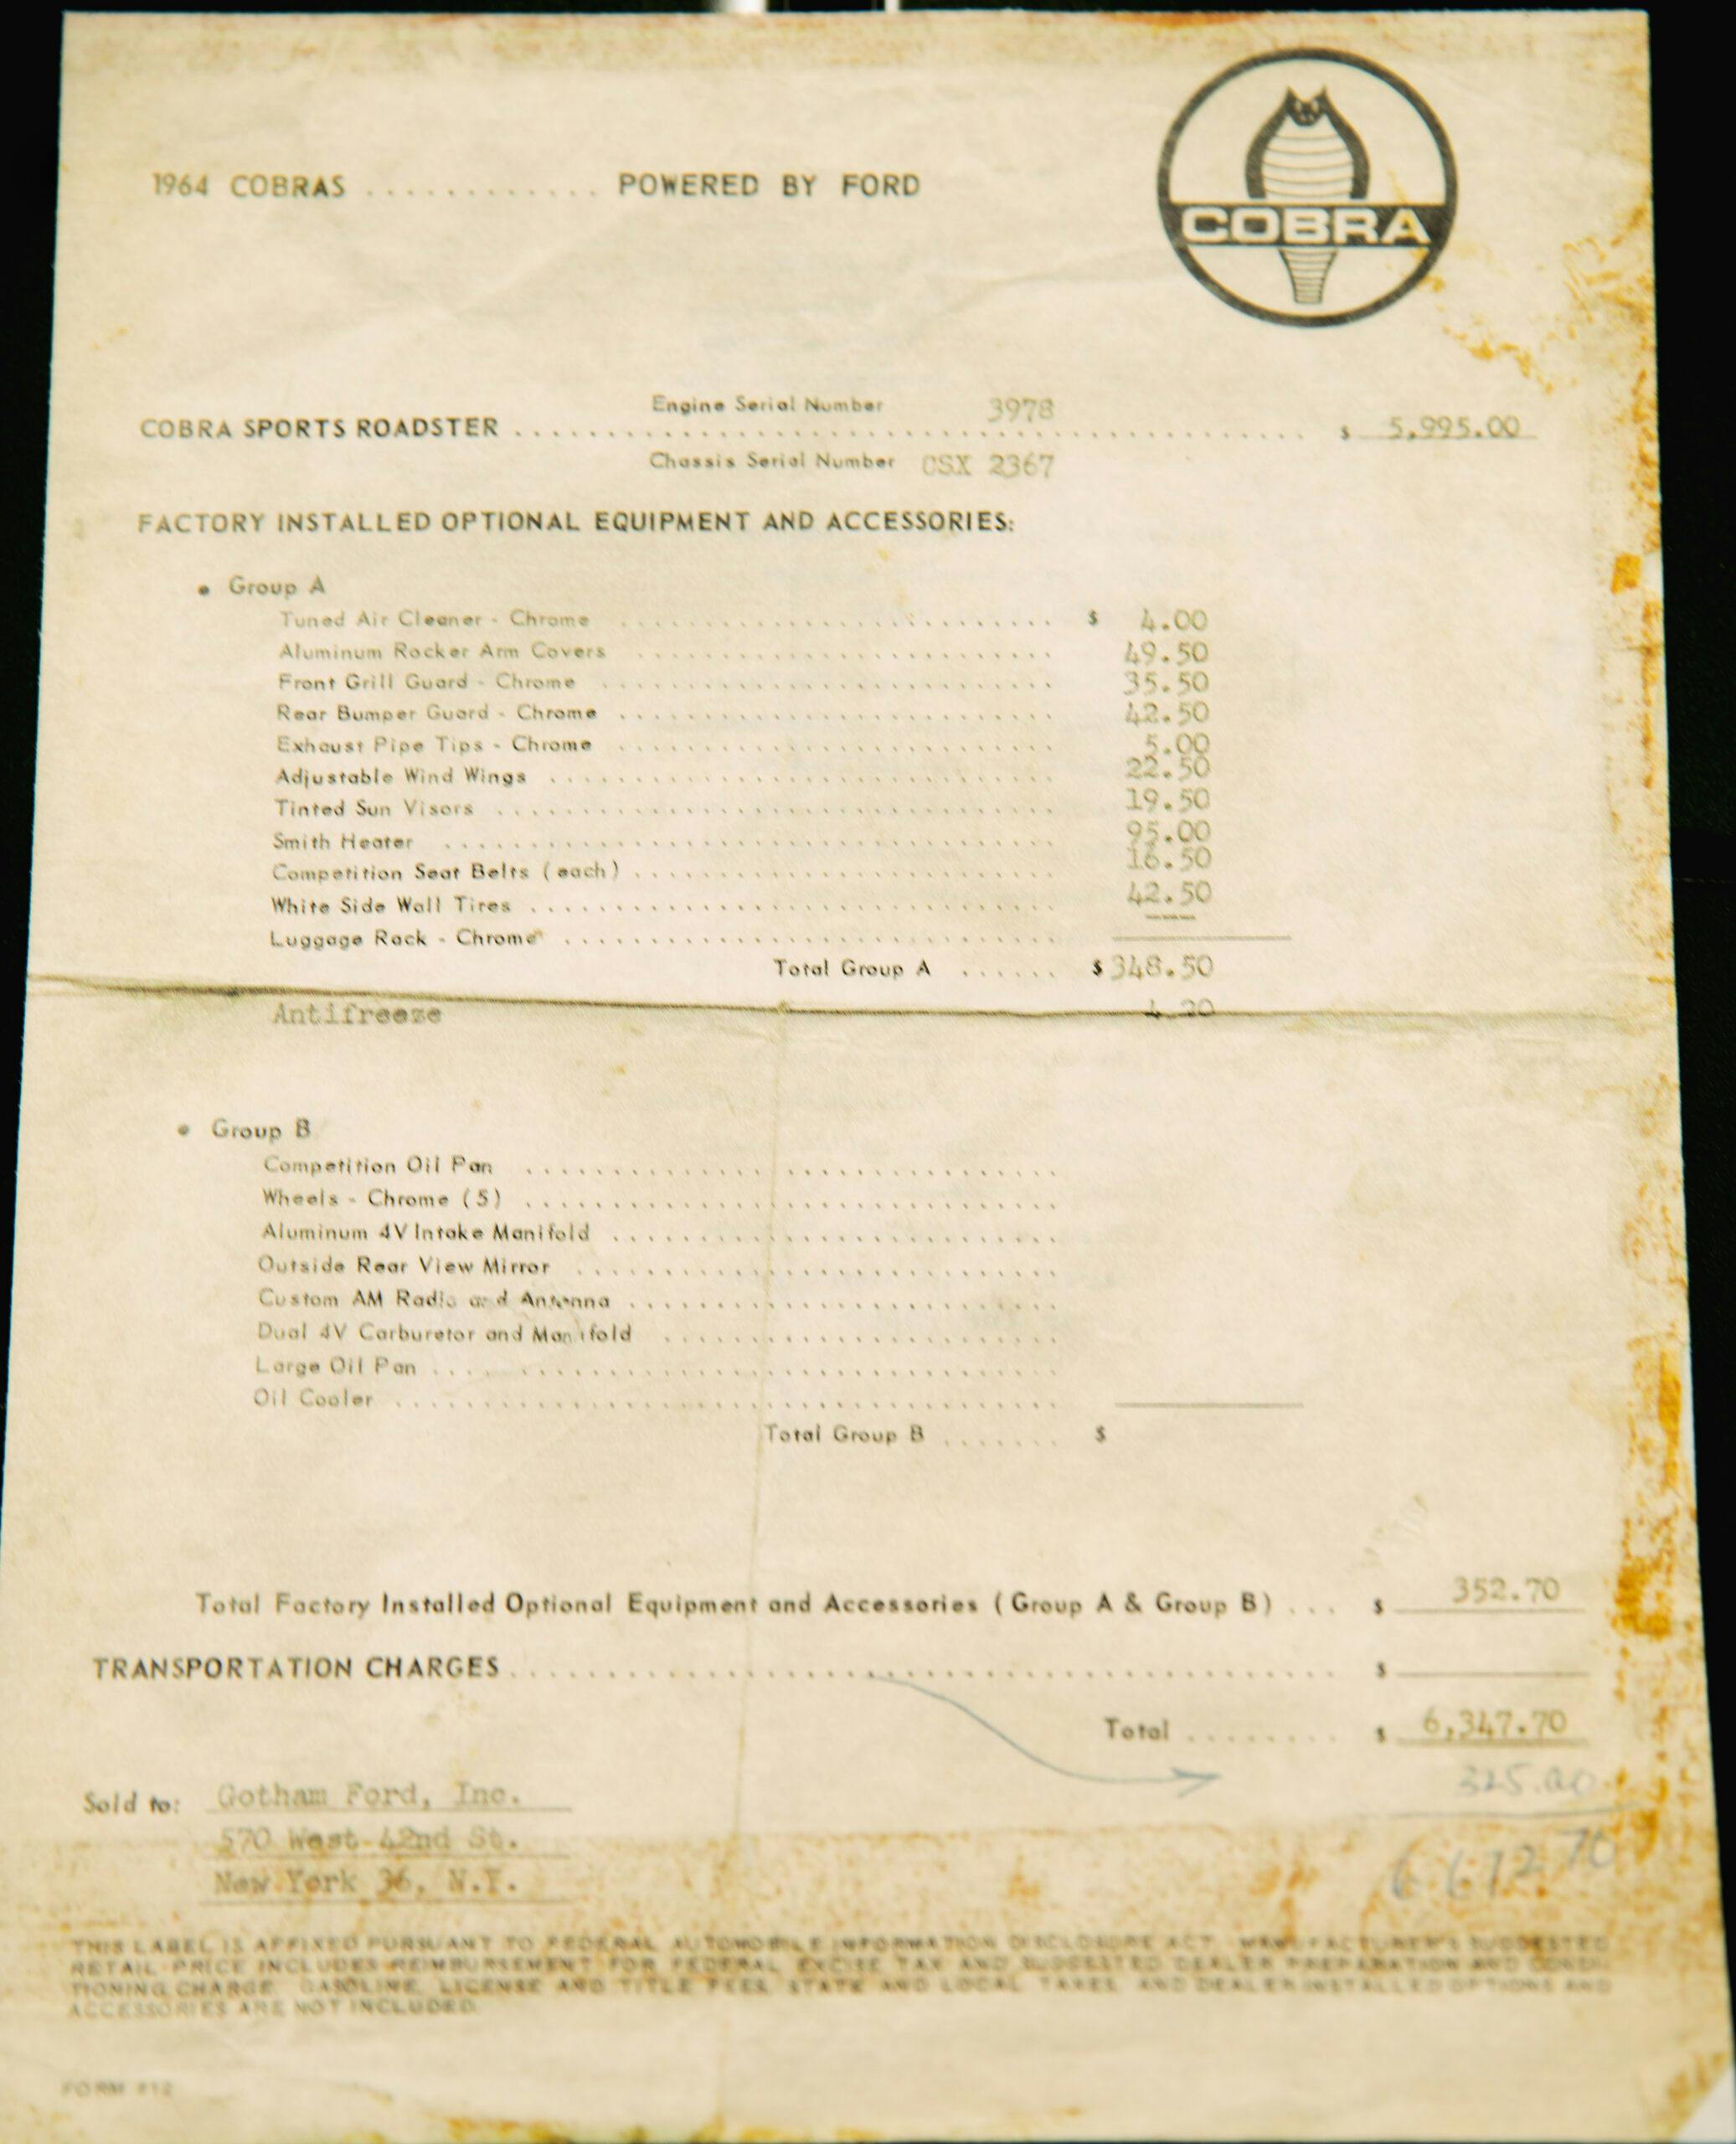 1964 Shelby Cobra paperwork